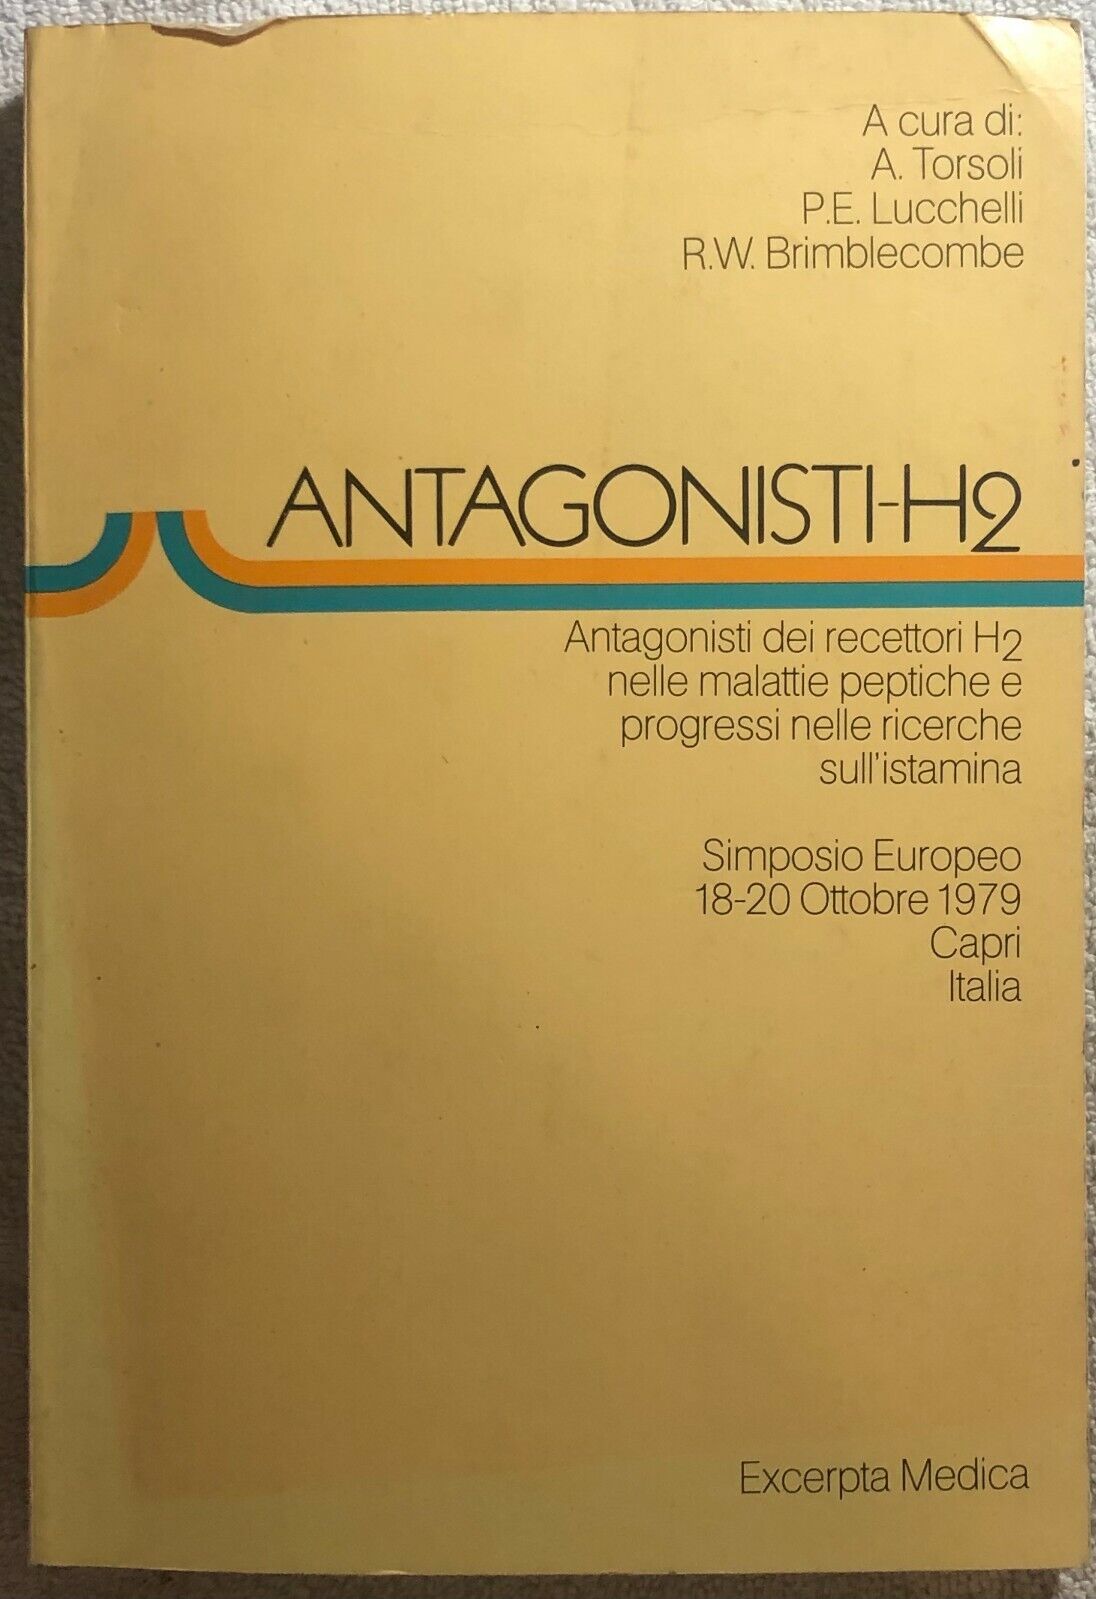 Antagonisti-H2 di Aa.vv.,  1979,  Excerpta Medica